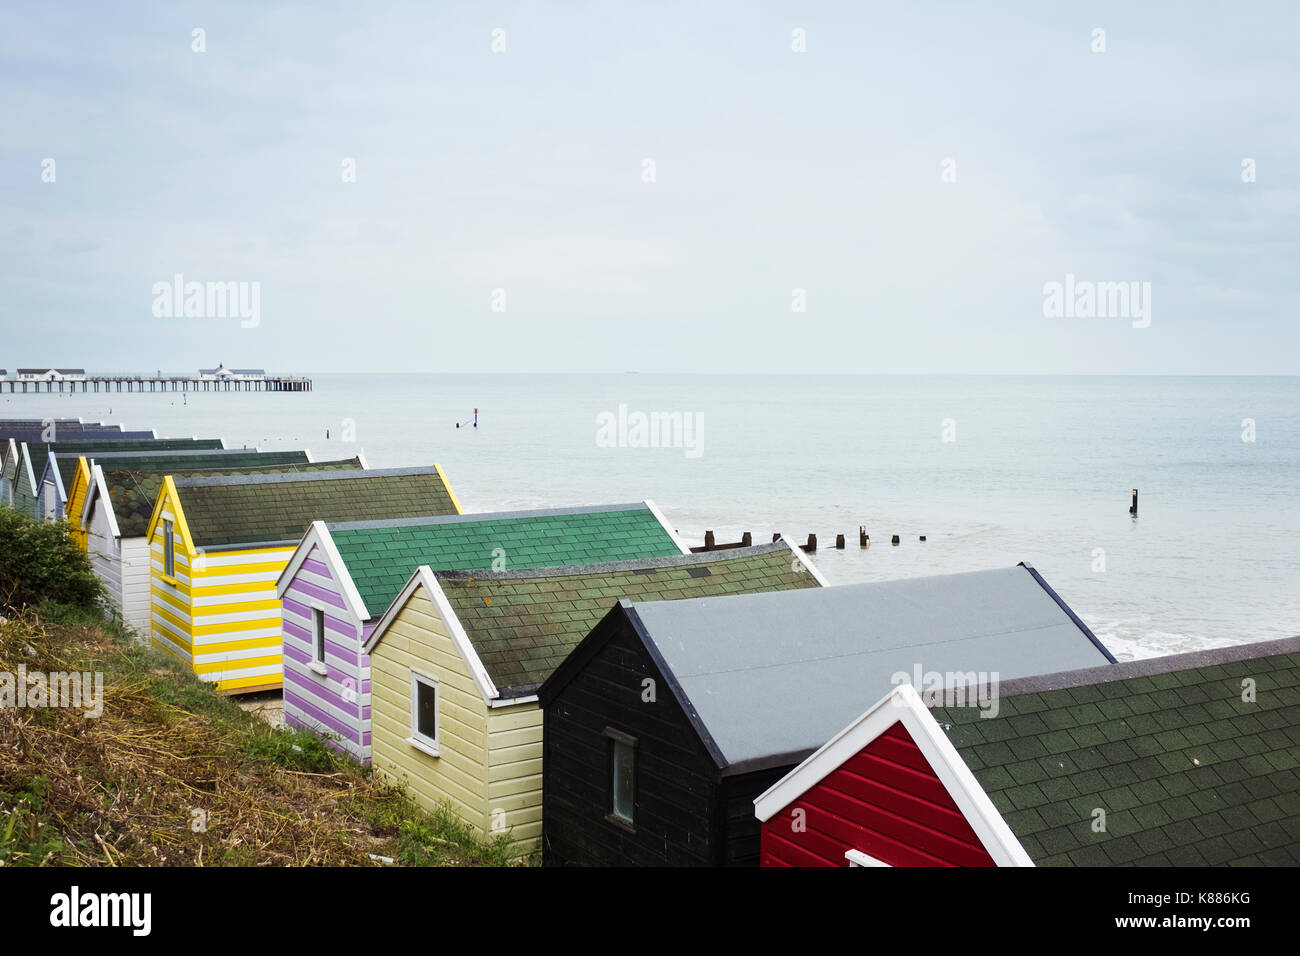 Row of colourful huts on a sandy beach under a cloudy sky. Stock Photo